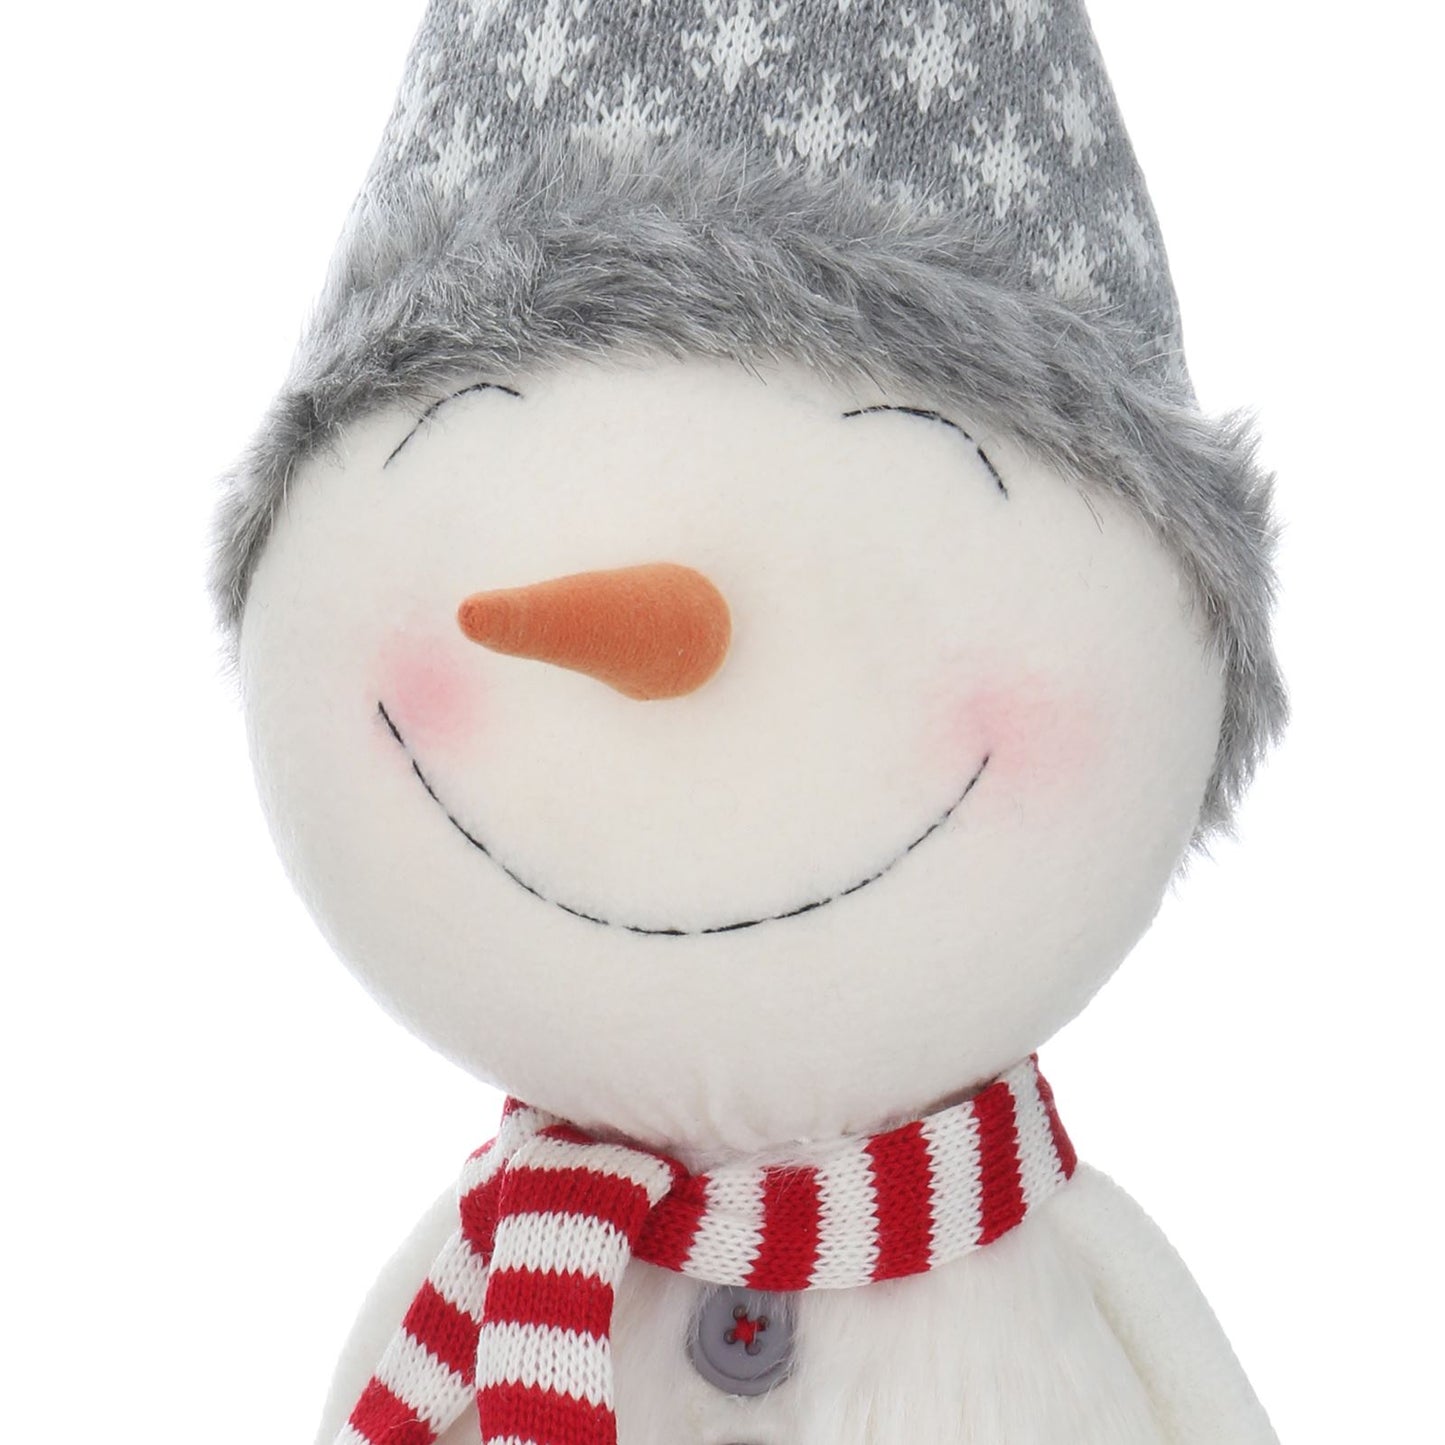 Mr Crimbo Novelty Sitting Snowman Christmas Figure 36cm Tall - MrCrimbo.co.uk -XS5735 - -christmas decorations